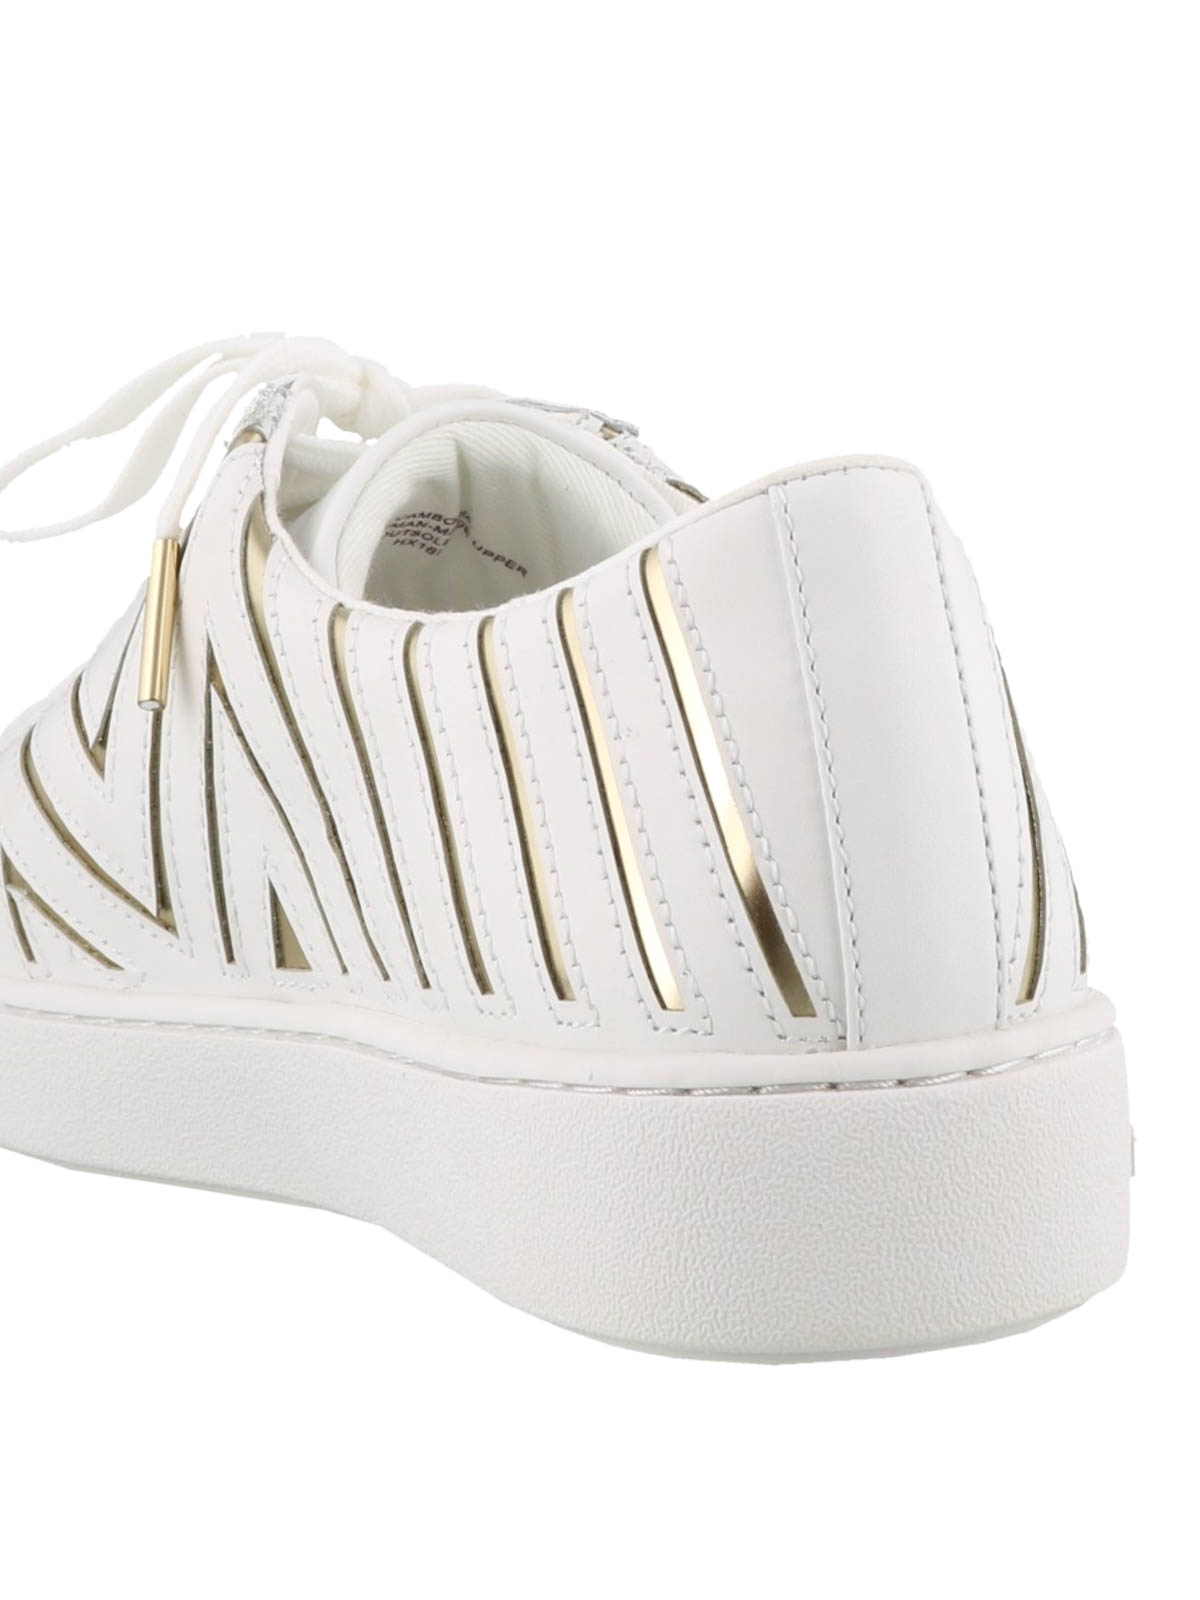 Michael Kors - Whitney white sneakers 